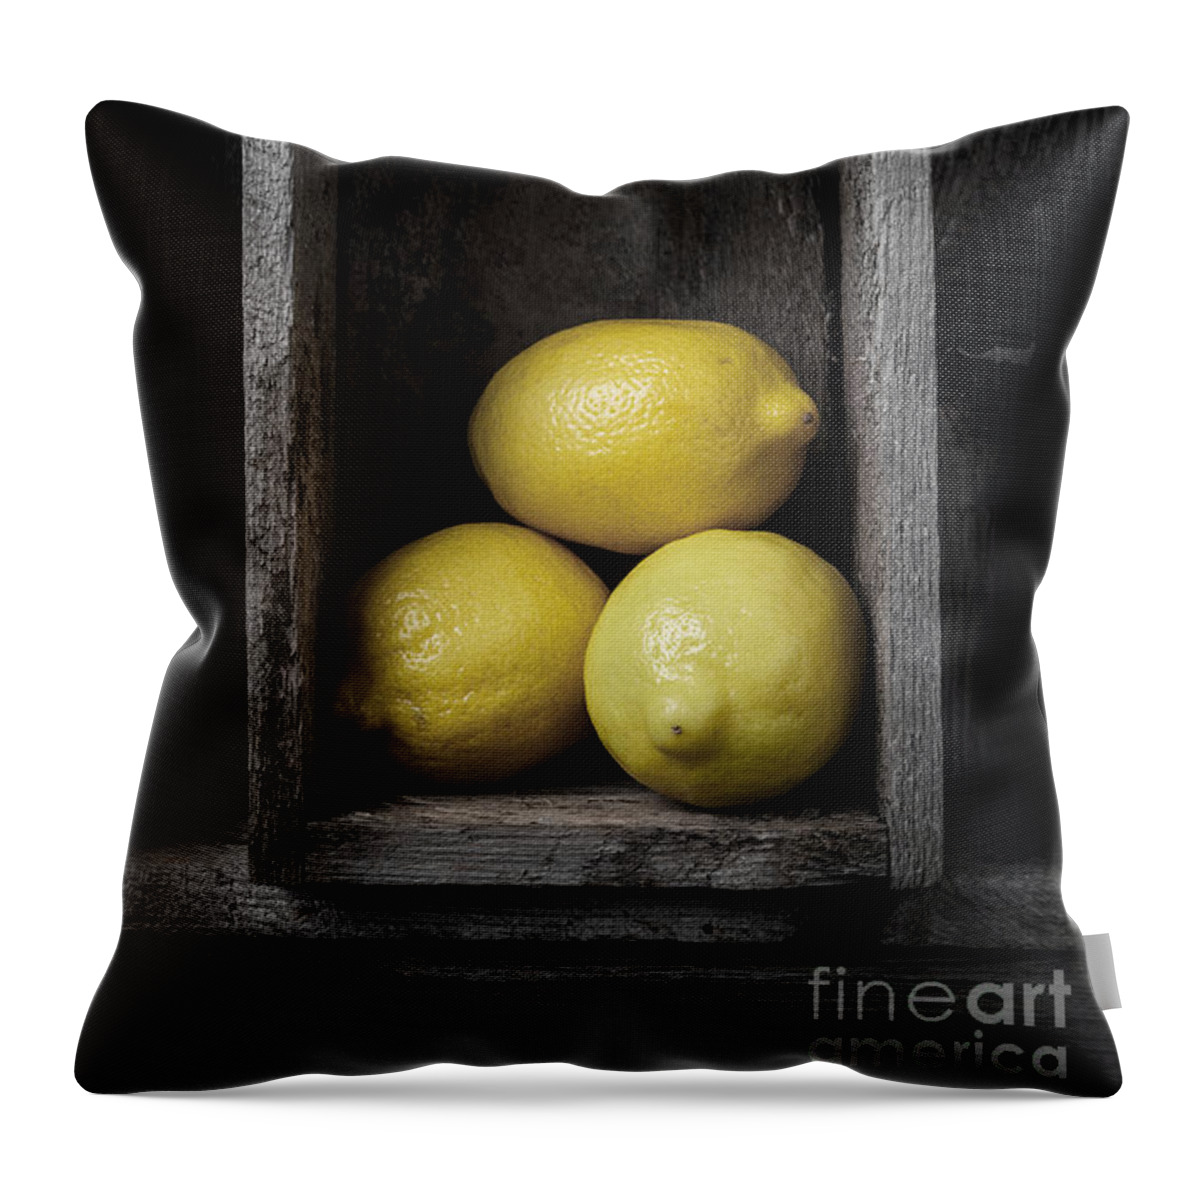 Lemons Throw Pillow featuring the photograph Lemons Still Life by Edward Fielding